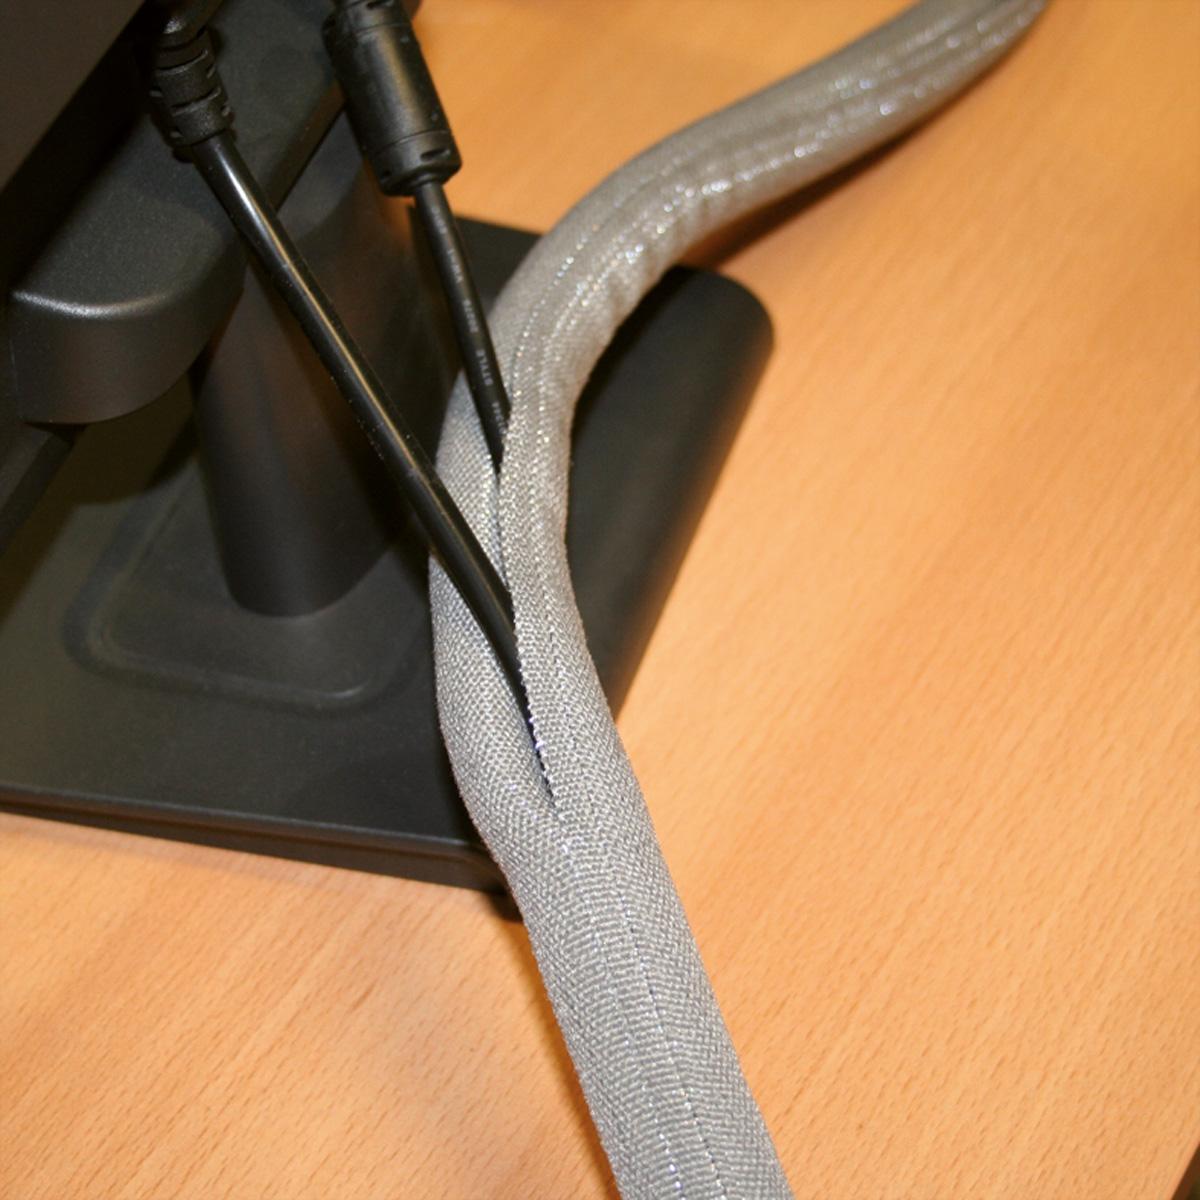 Kabelbinder, Kabelbündelung SNAP VALUE grau für Gewebeschlauch